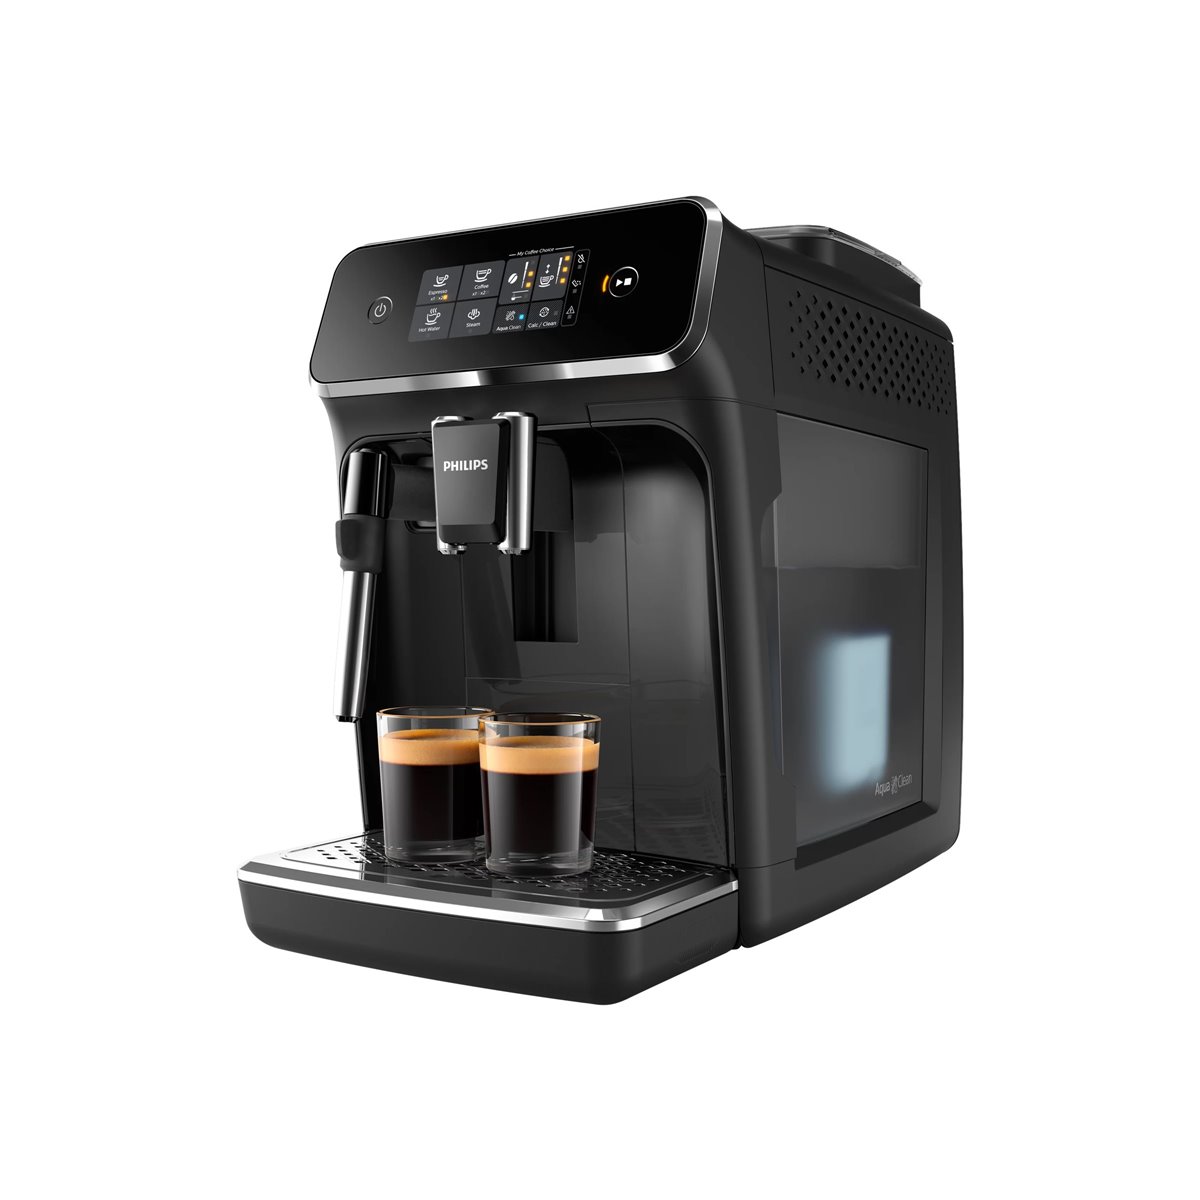 Philips 2200 series EP2224-40 - Espresso machine - 1.8 L - Coffee beans - Built-in grinder - 1500 W - Grey